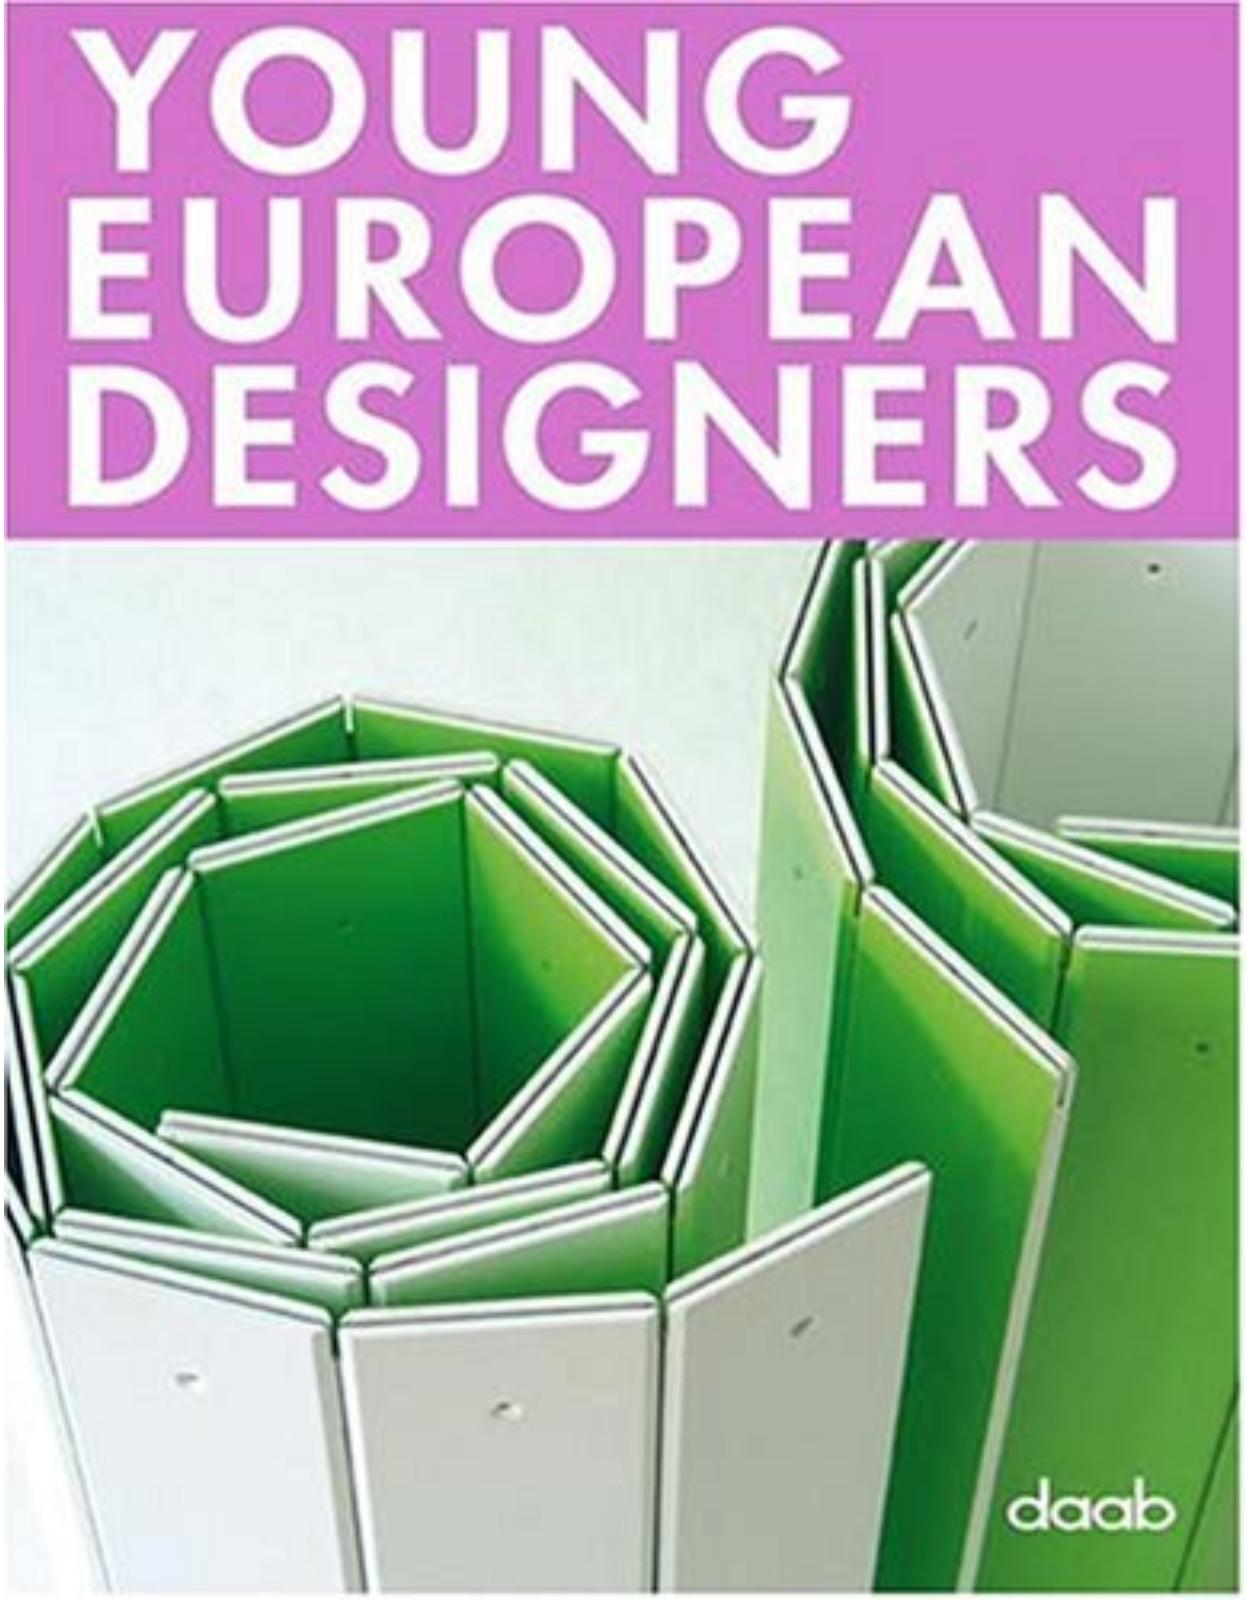 Young European Designers